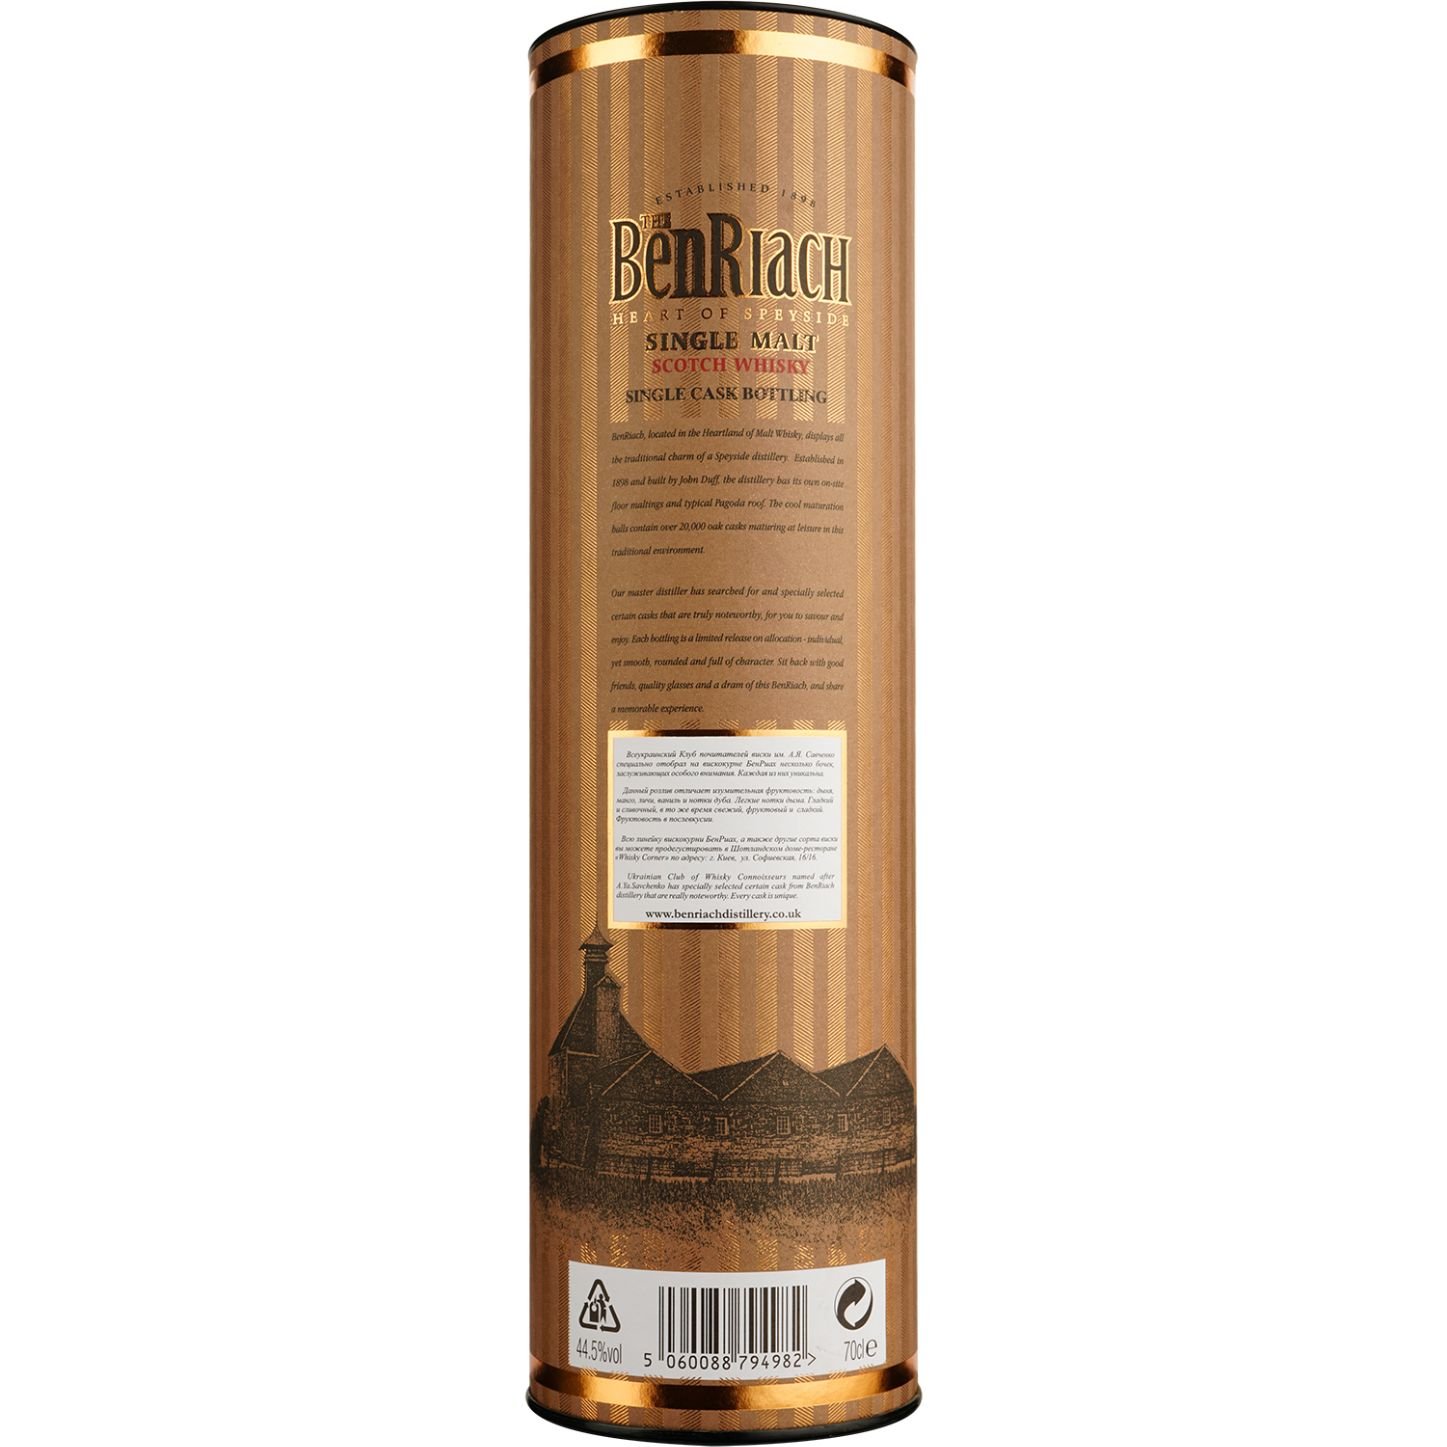 Віскі BenRiach 32 Years Old Refill Bourbon Barrel Cask 7512 Single Malt Scotch Whisky, у подарунковій упаковці, 44,5%, 0,7 л - фото 6